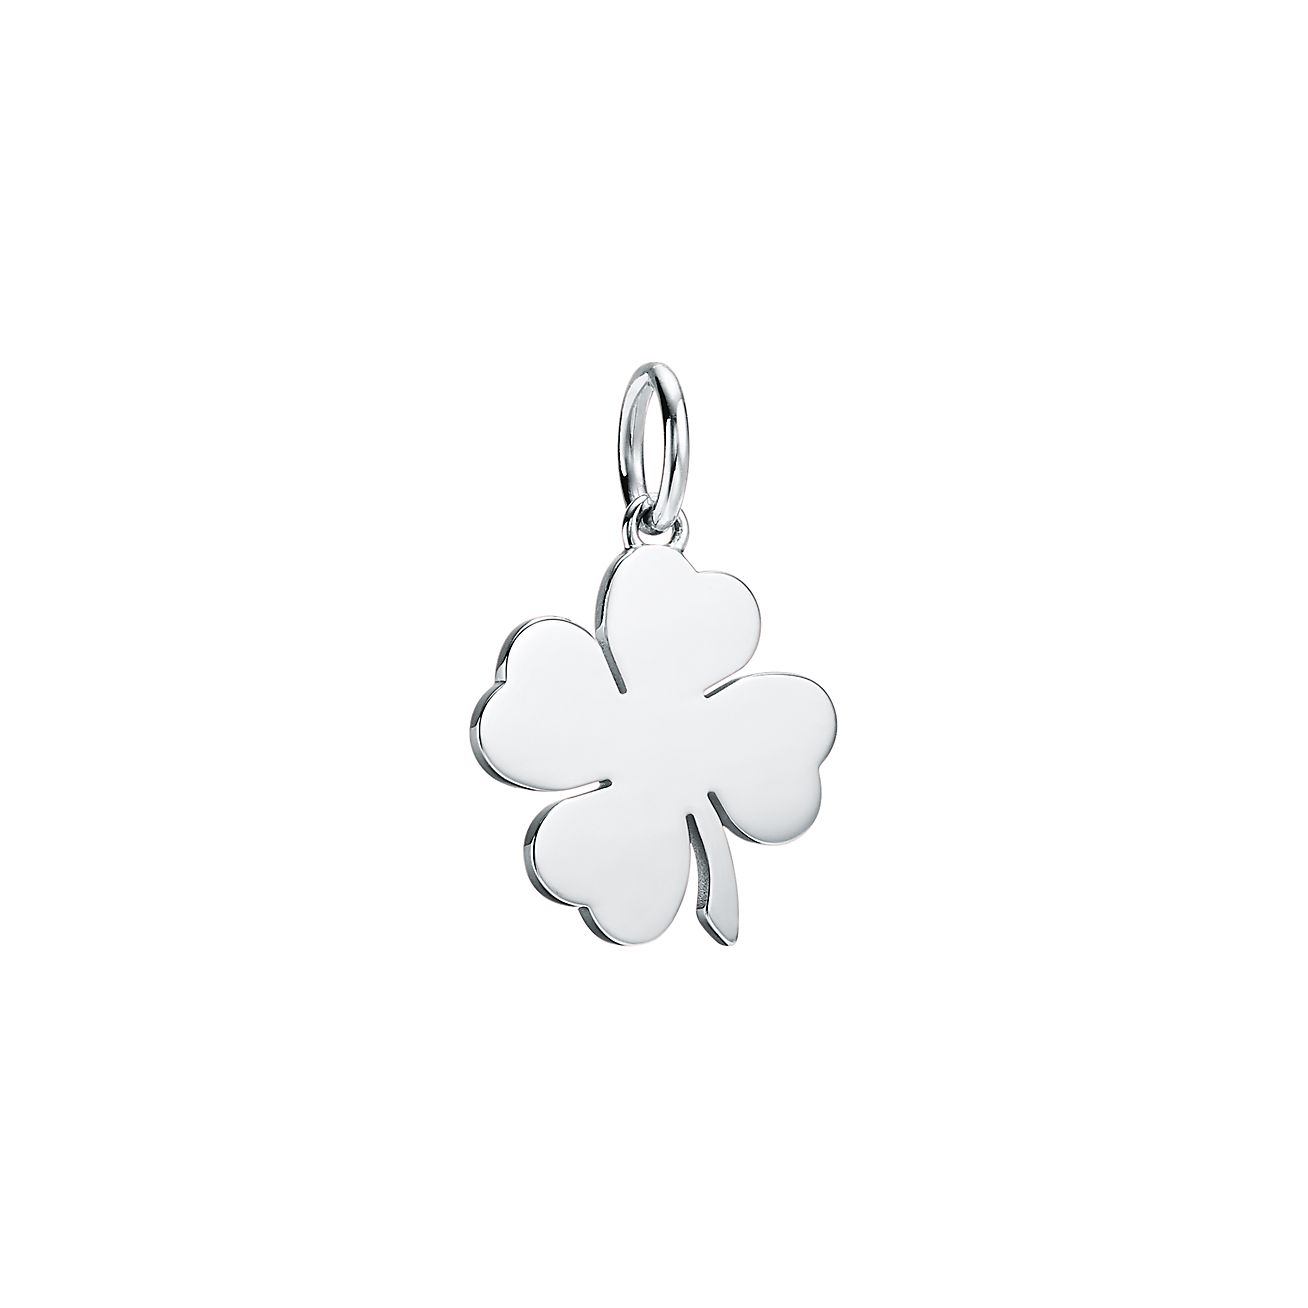 tiffany 4 leaf clover necklace